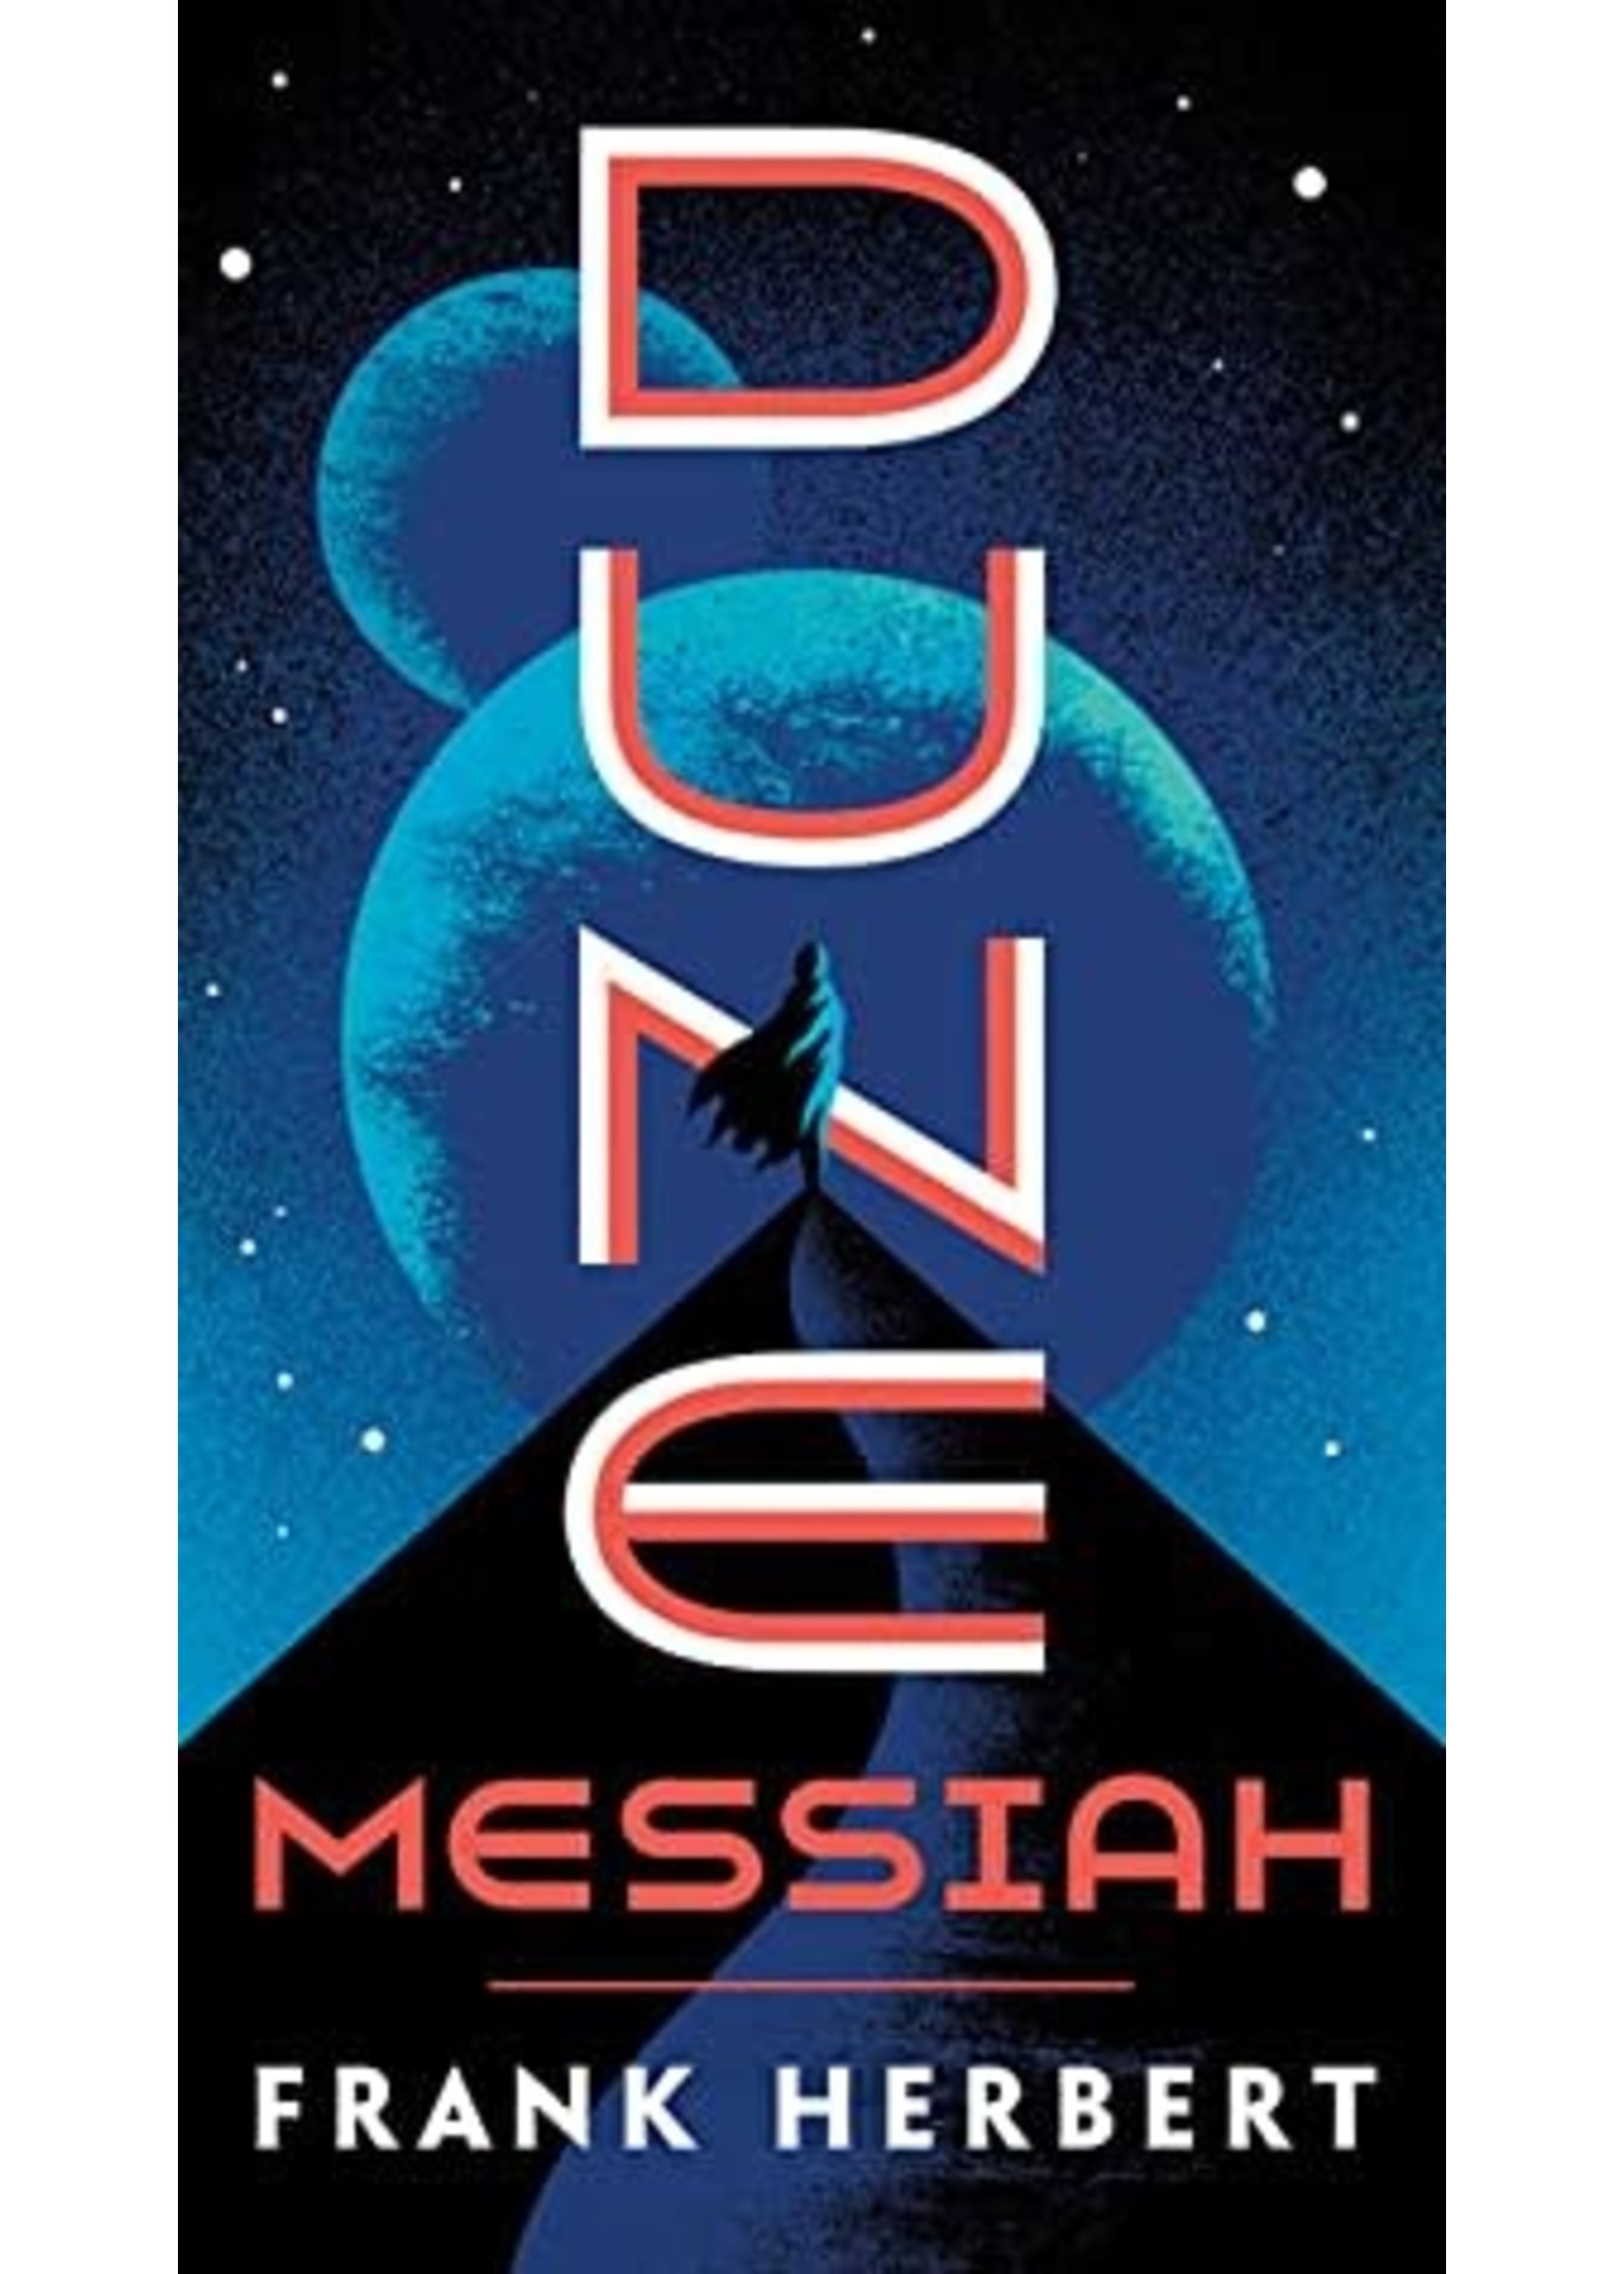 Dune Messiah (Dune #2) by Frank Herbert